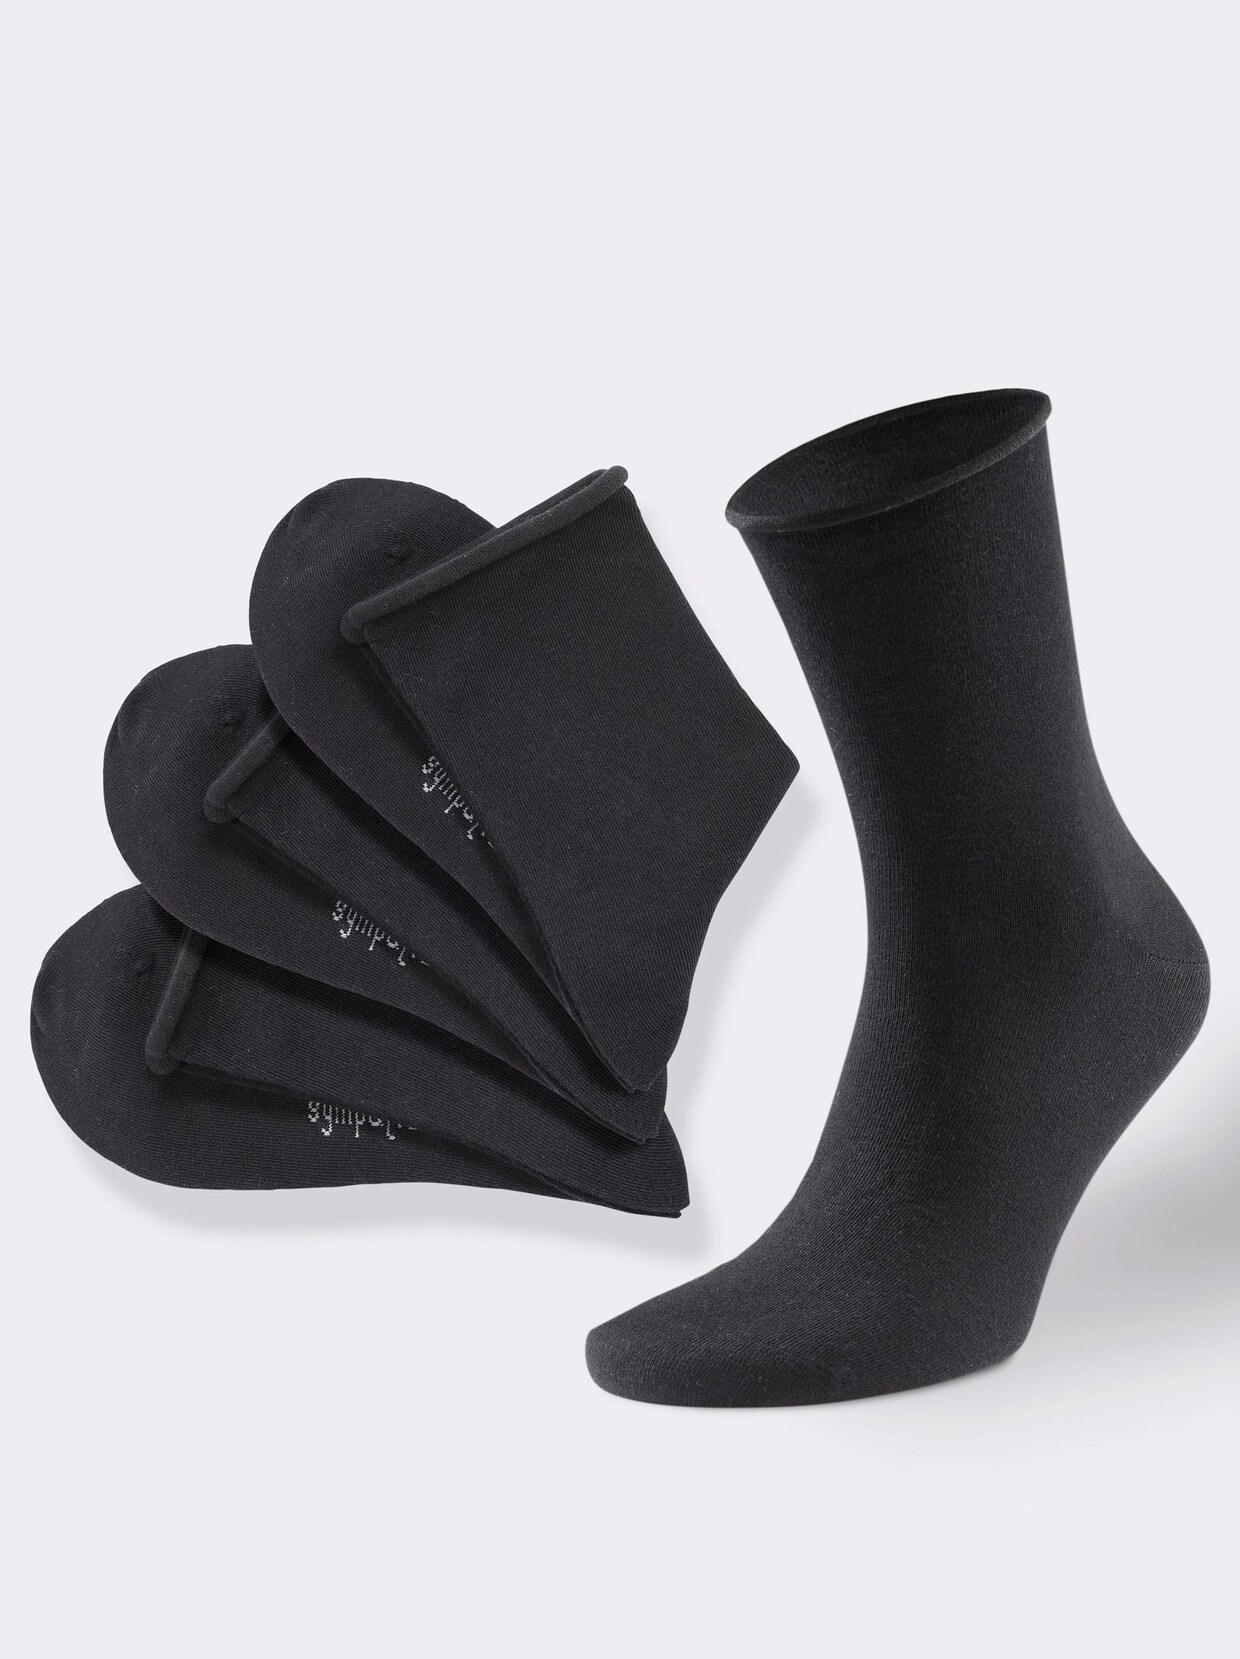 Sympatico Damen-Socken - schwarz